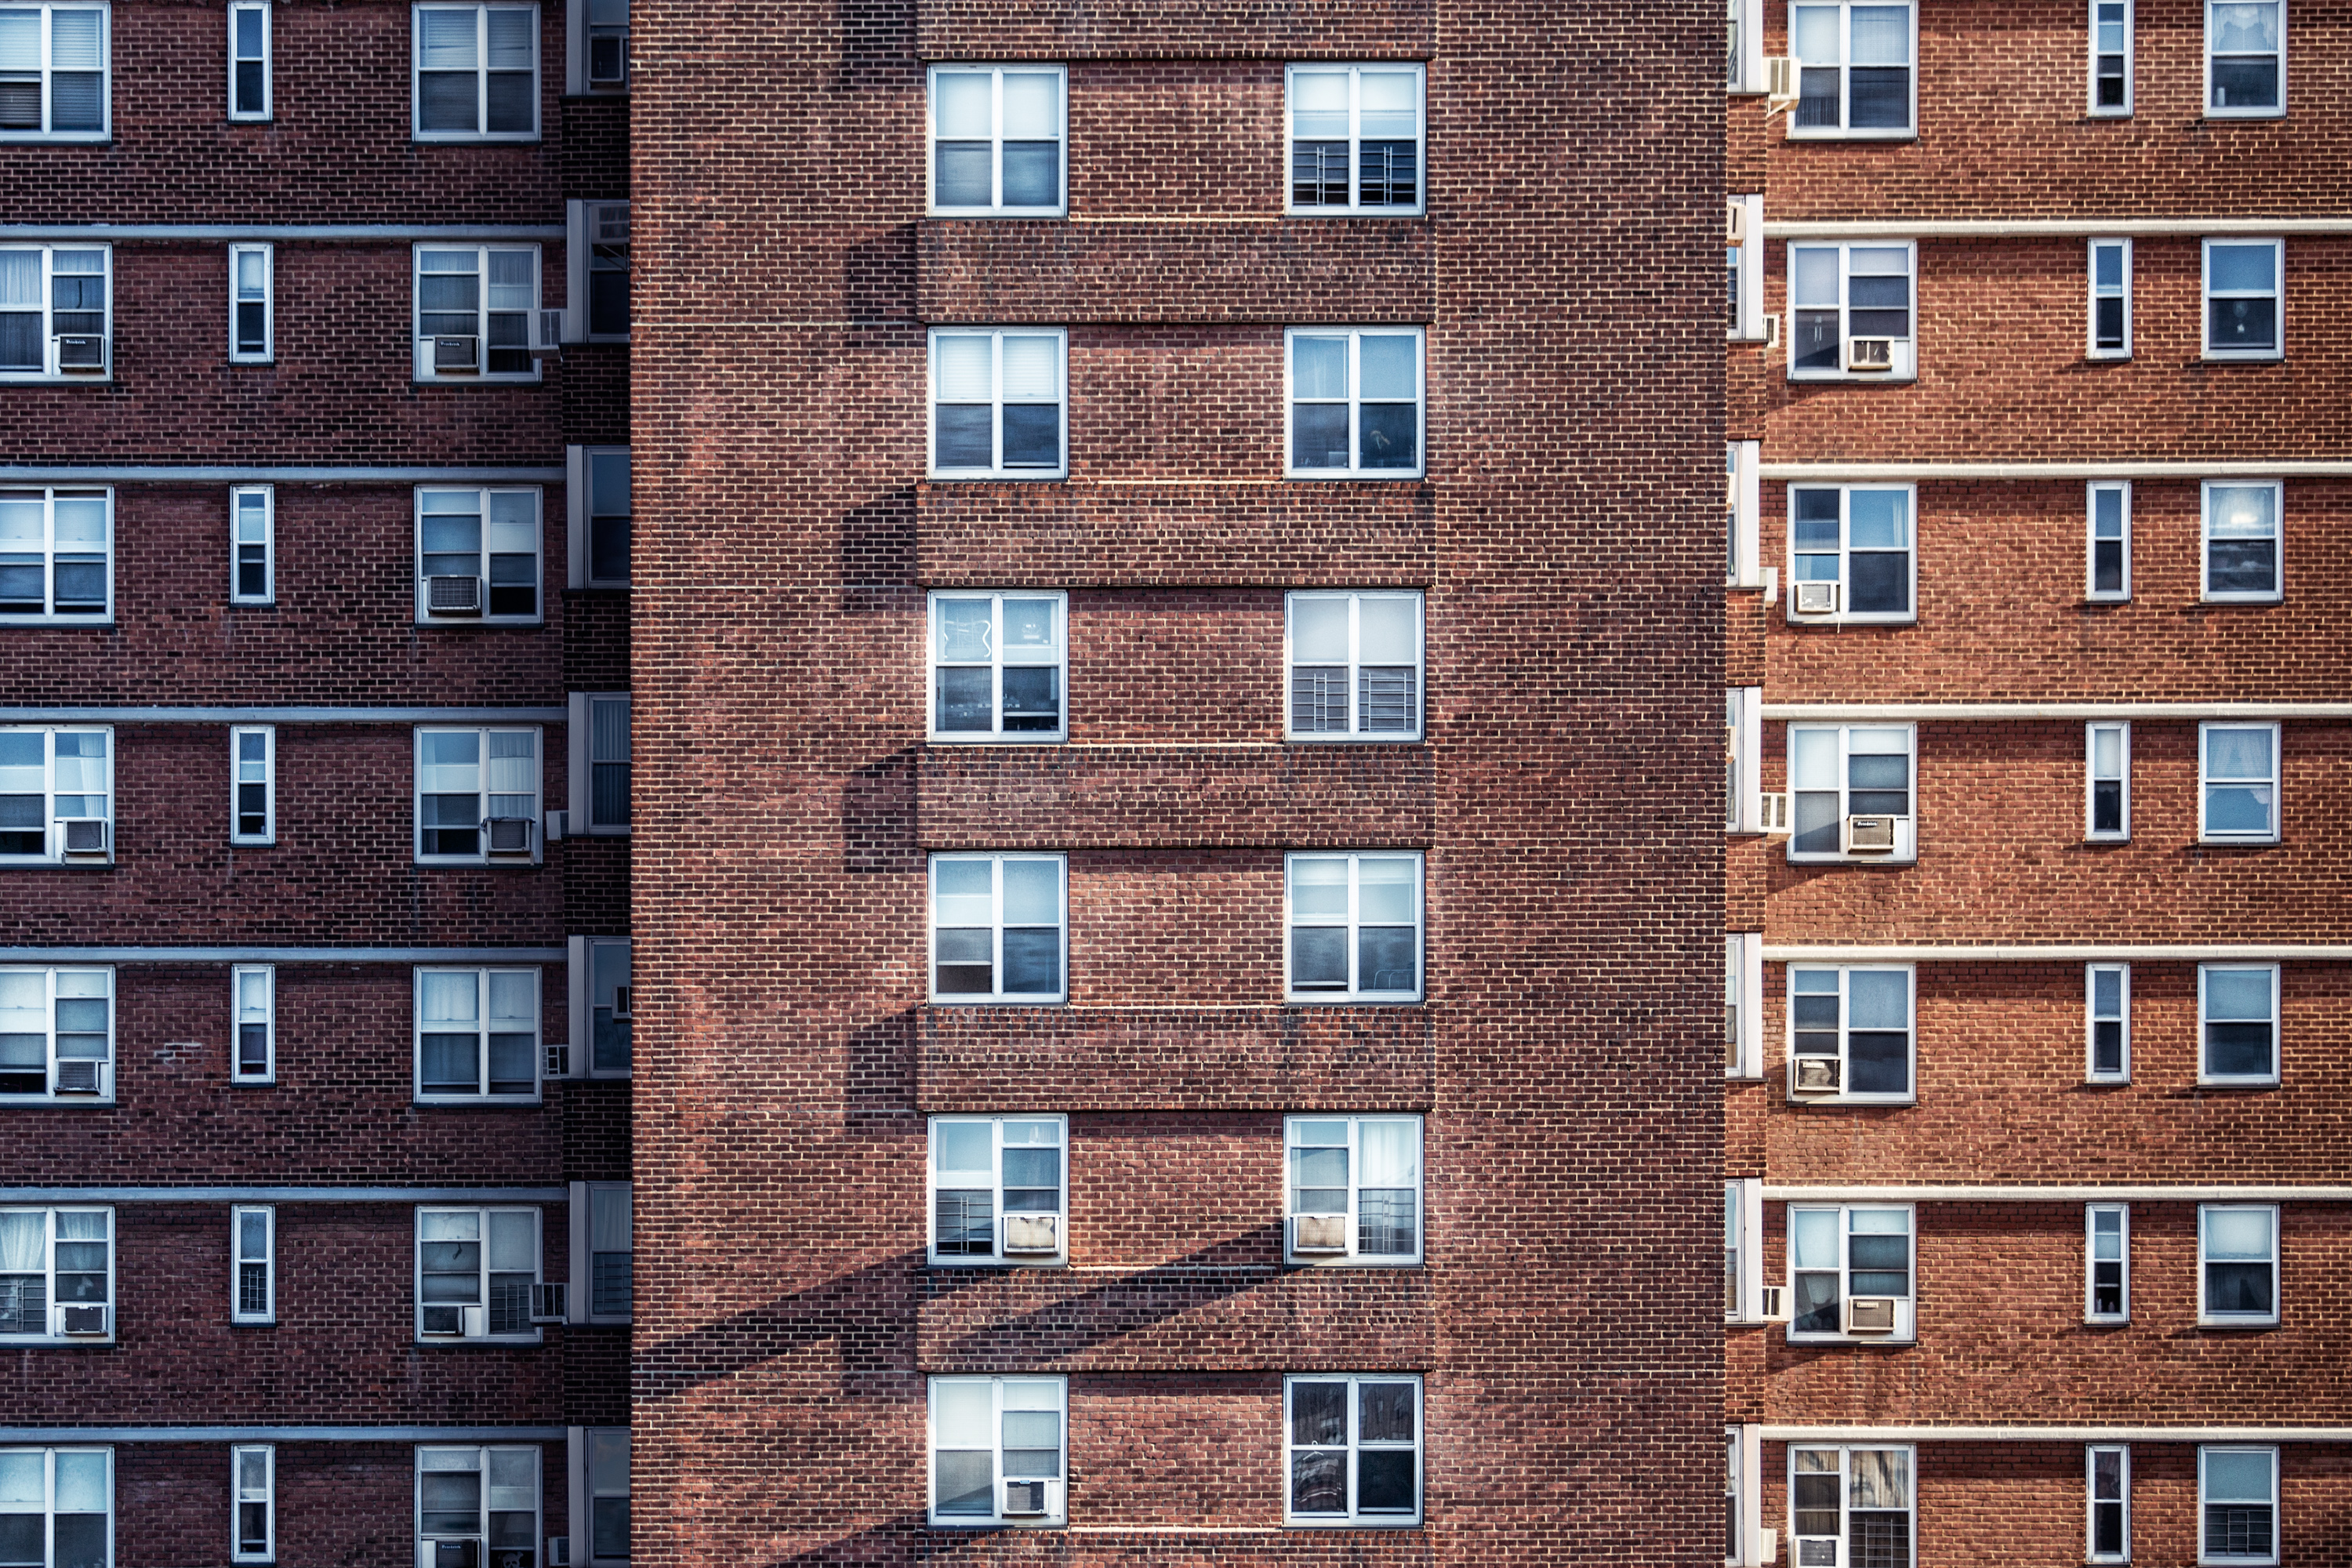 Photo by Vladimir Kudinov from Pexels https://www.pexels.com/photo/new-york-building-windows-manhattan-36366/